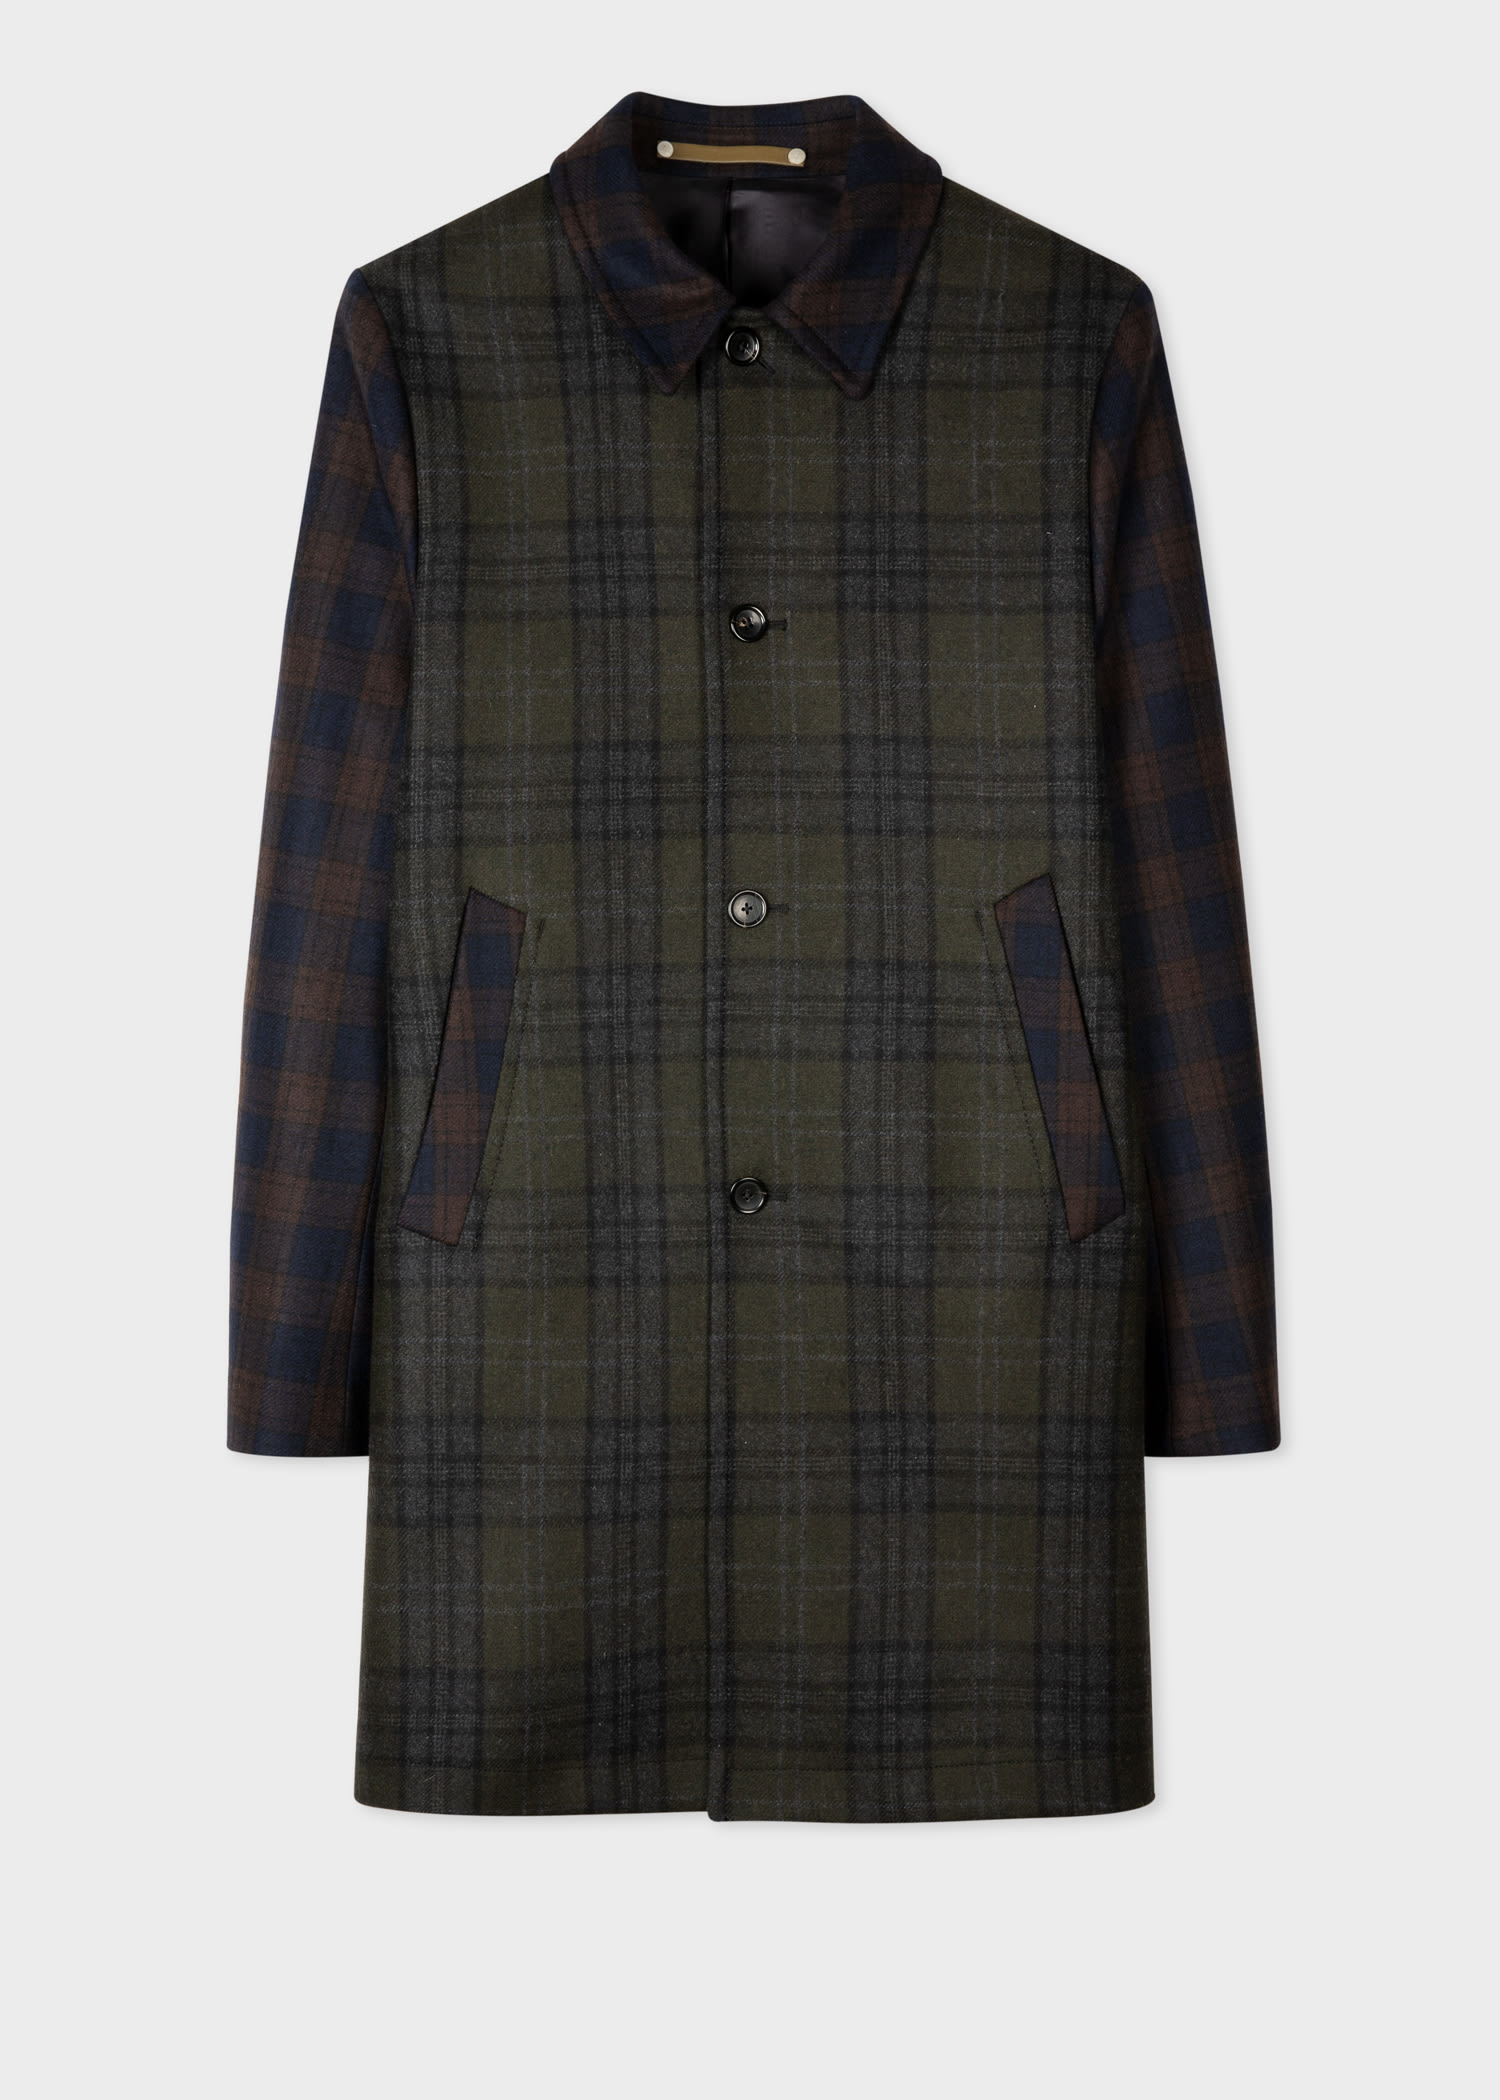 Men's Designer Jackets, Coats and Parkas - Paul Smith